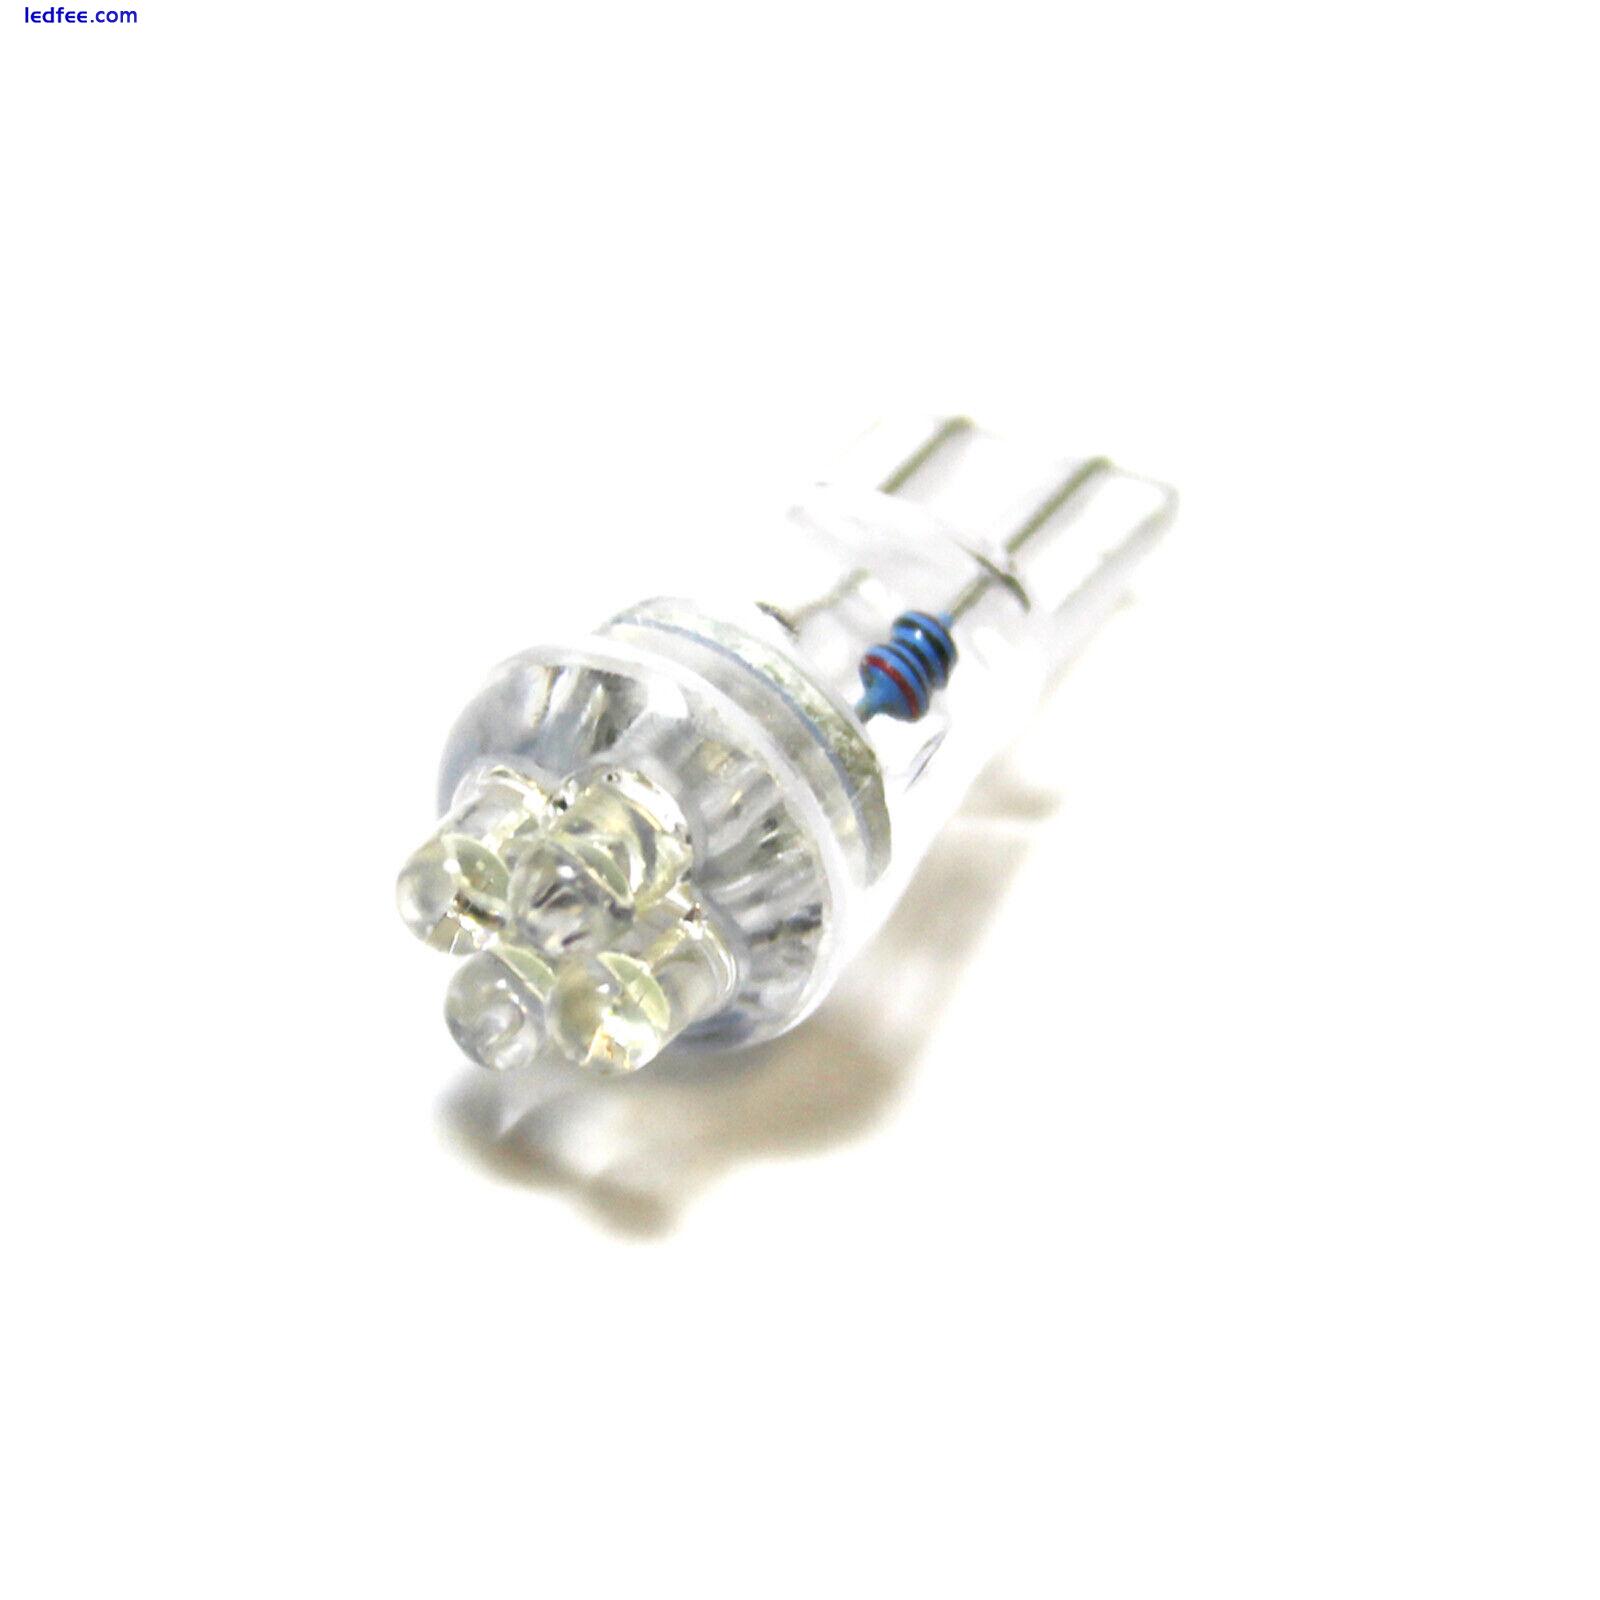 H7 501 100w Super White Upgrade Xenon HID Low/LED Side Light Headlight Bulbs 1 